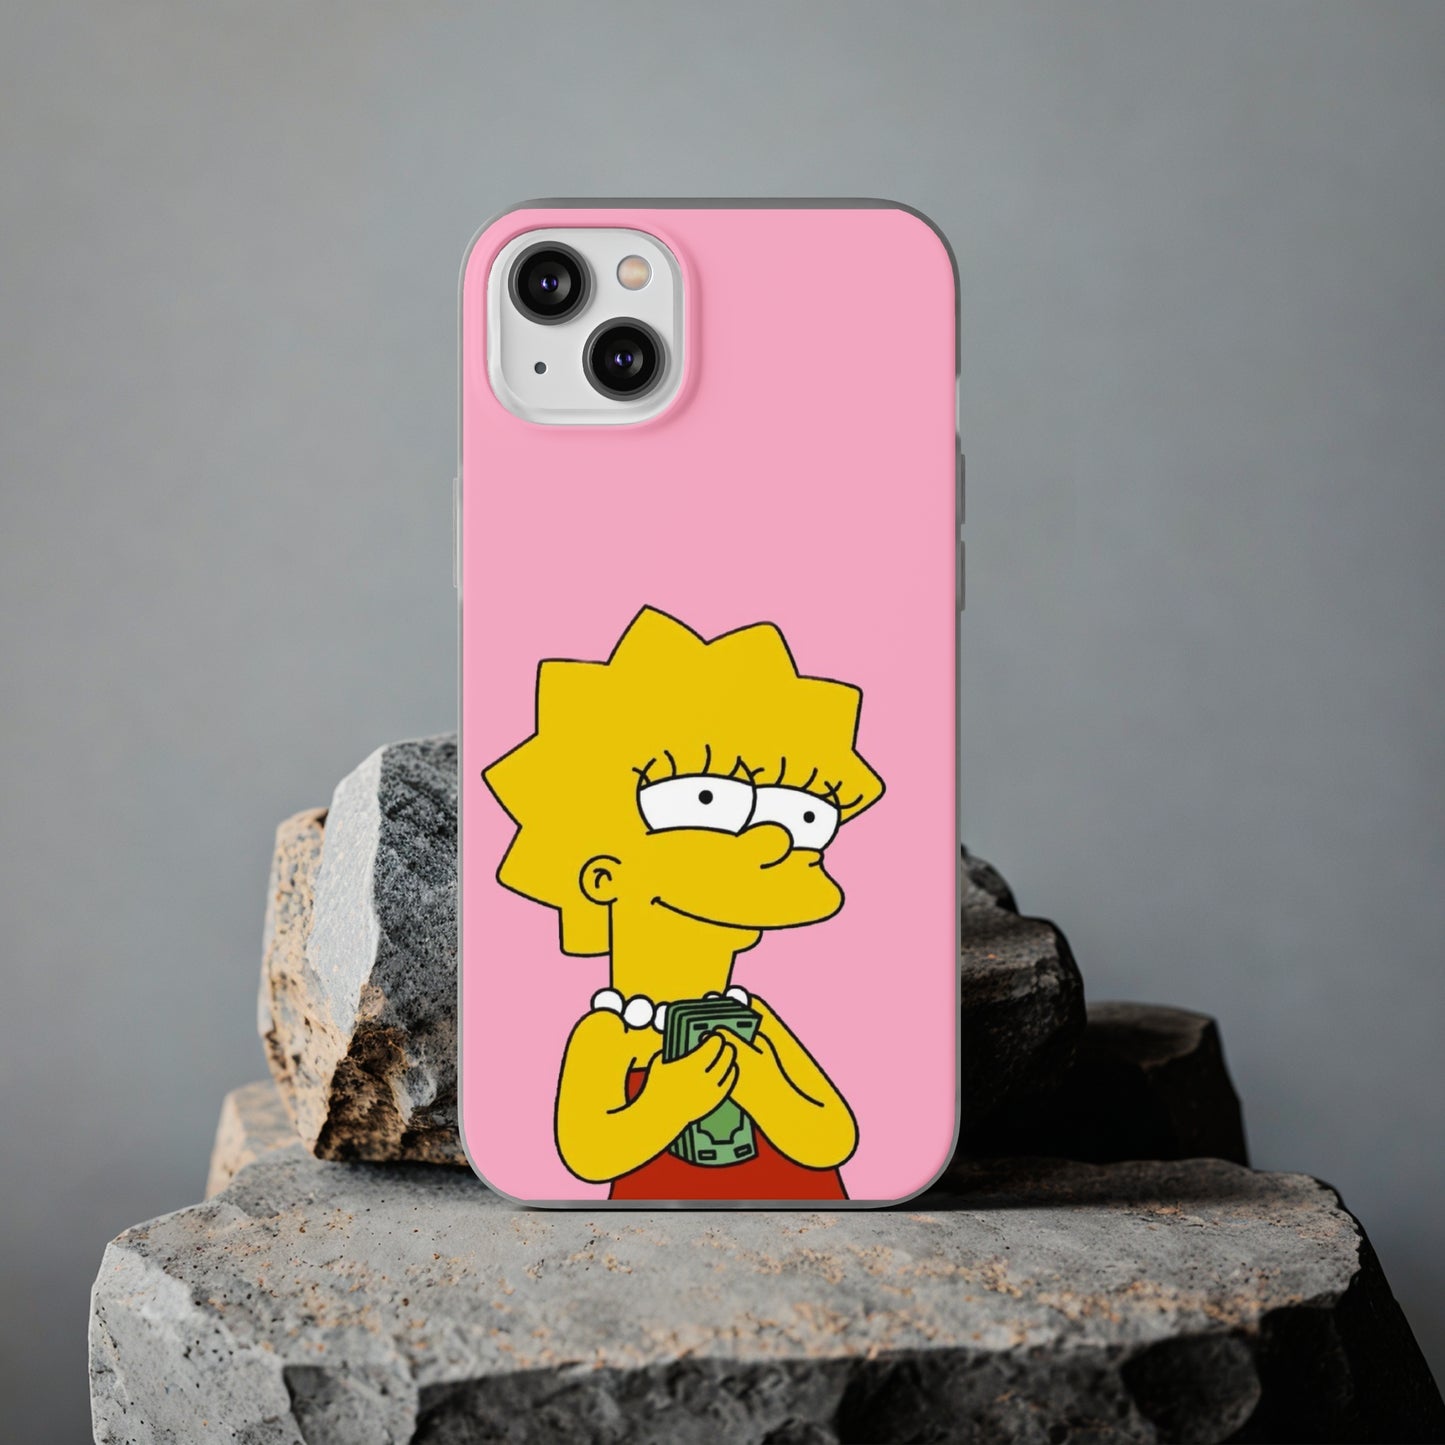 Lisa Simpson Phone Case